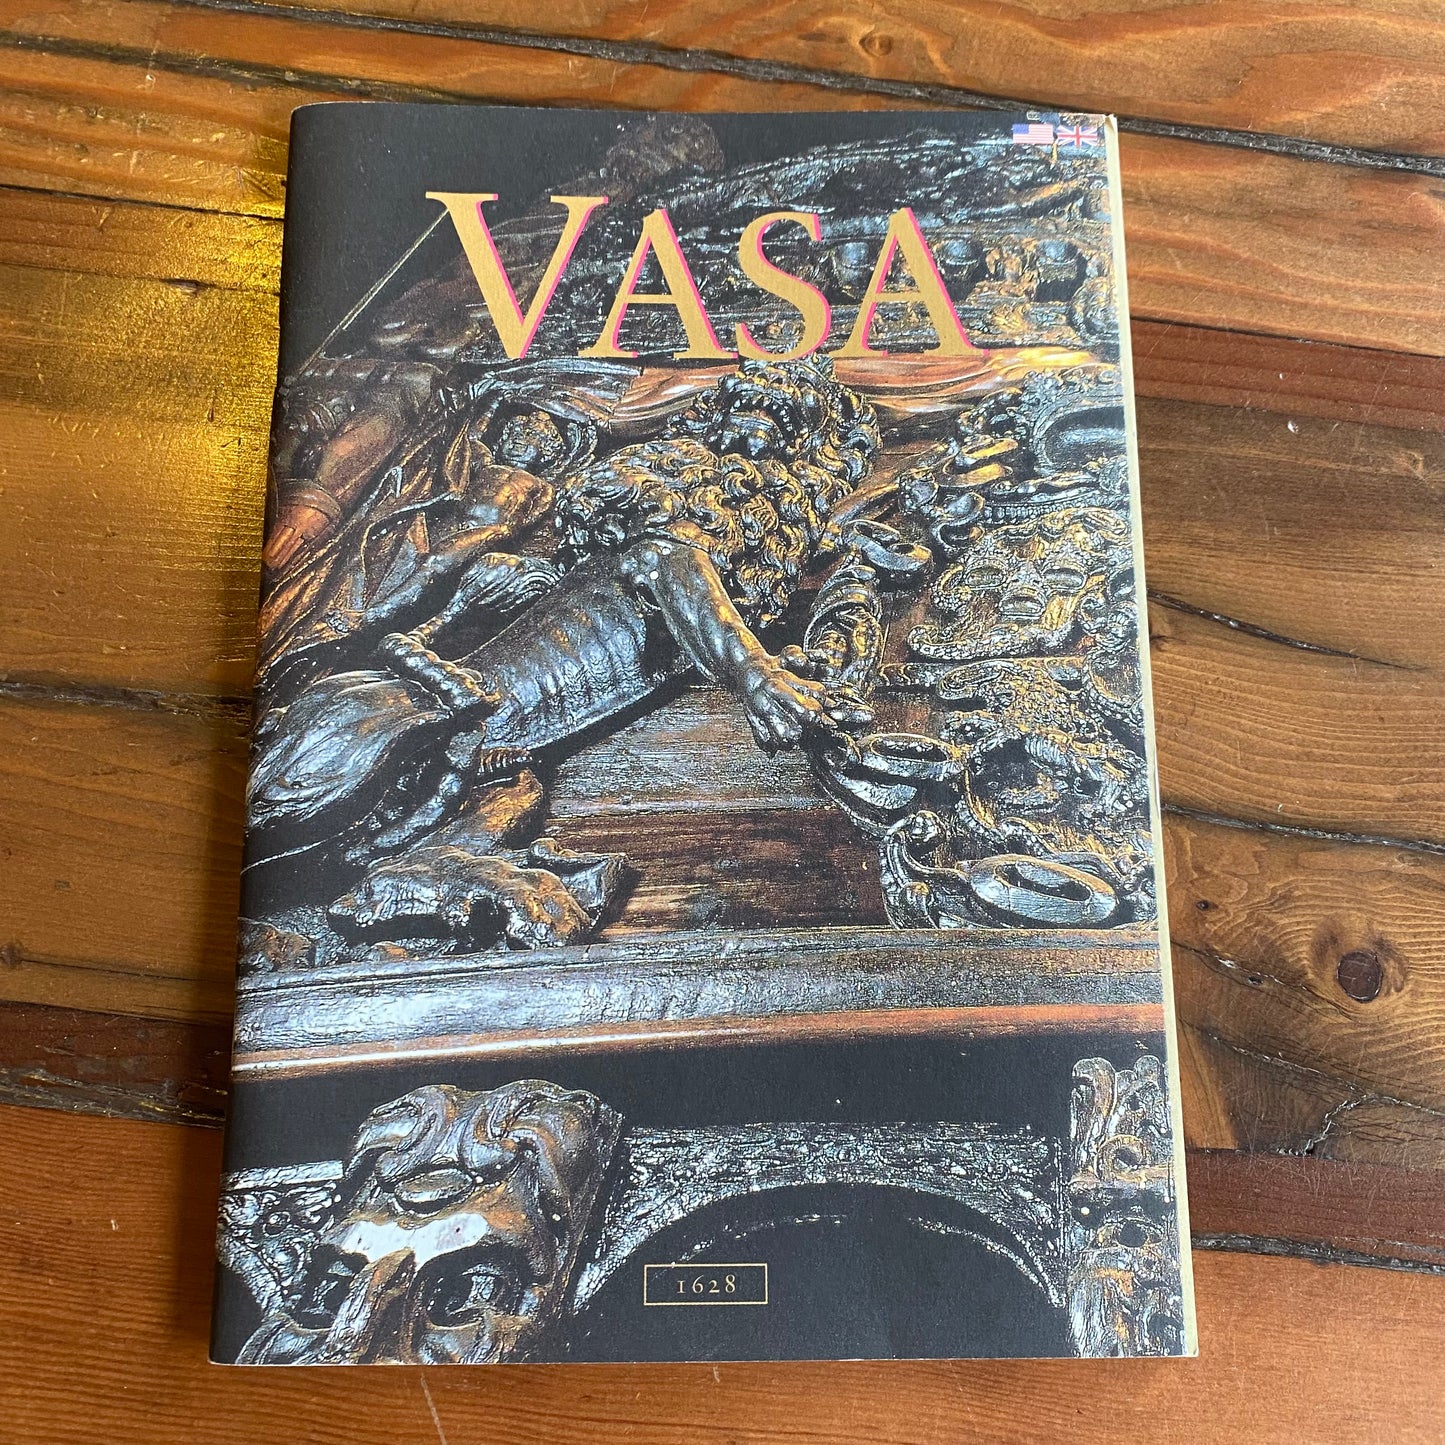 Book, "Vasa"